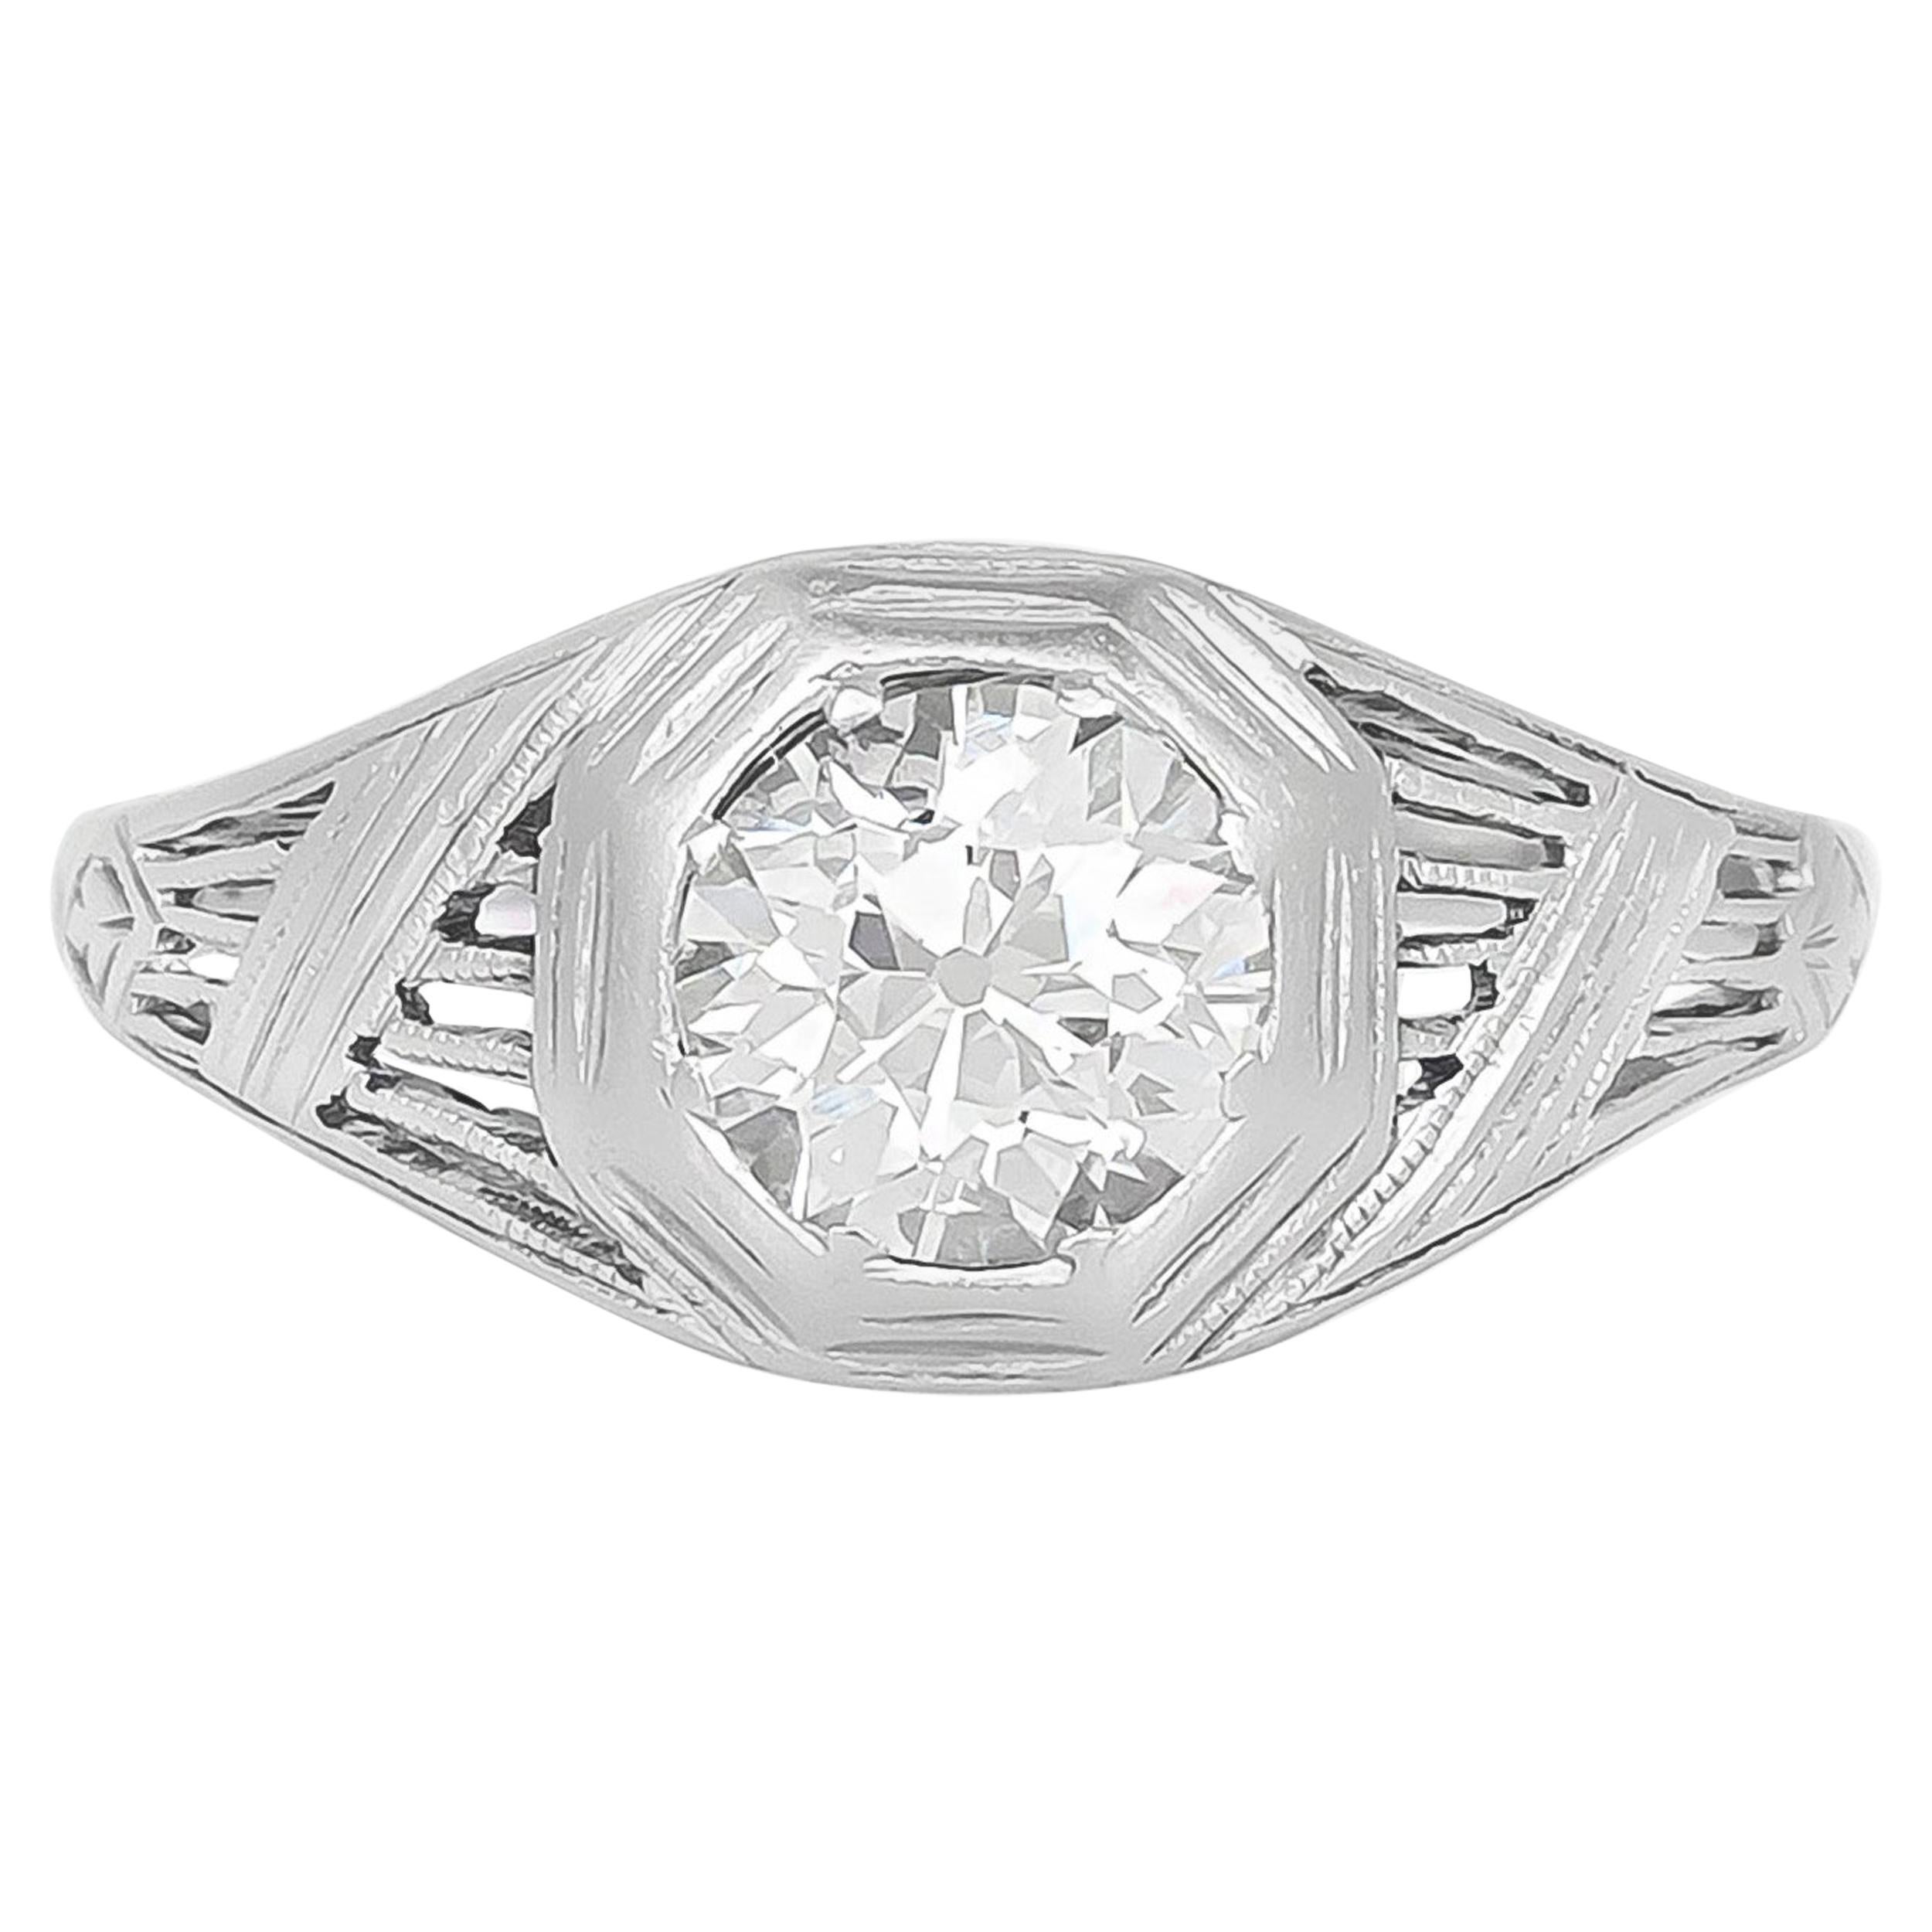 1920s-1930s Platinum Engagement Ring with 1.00 Carat Diamond